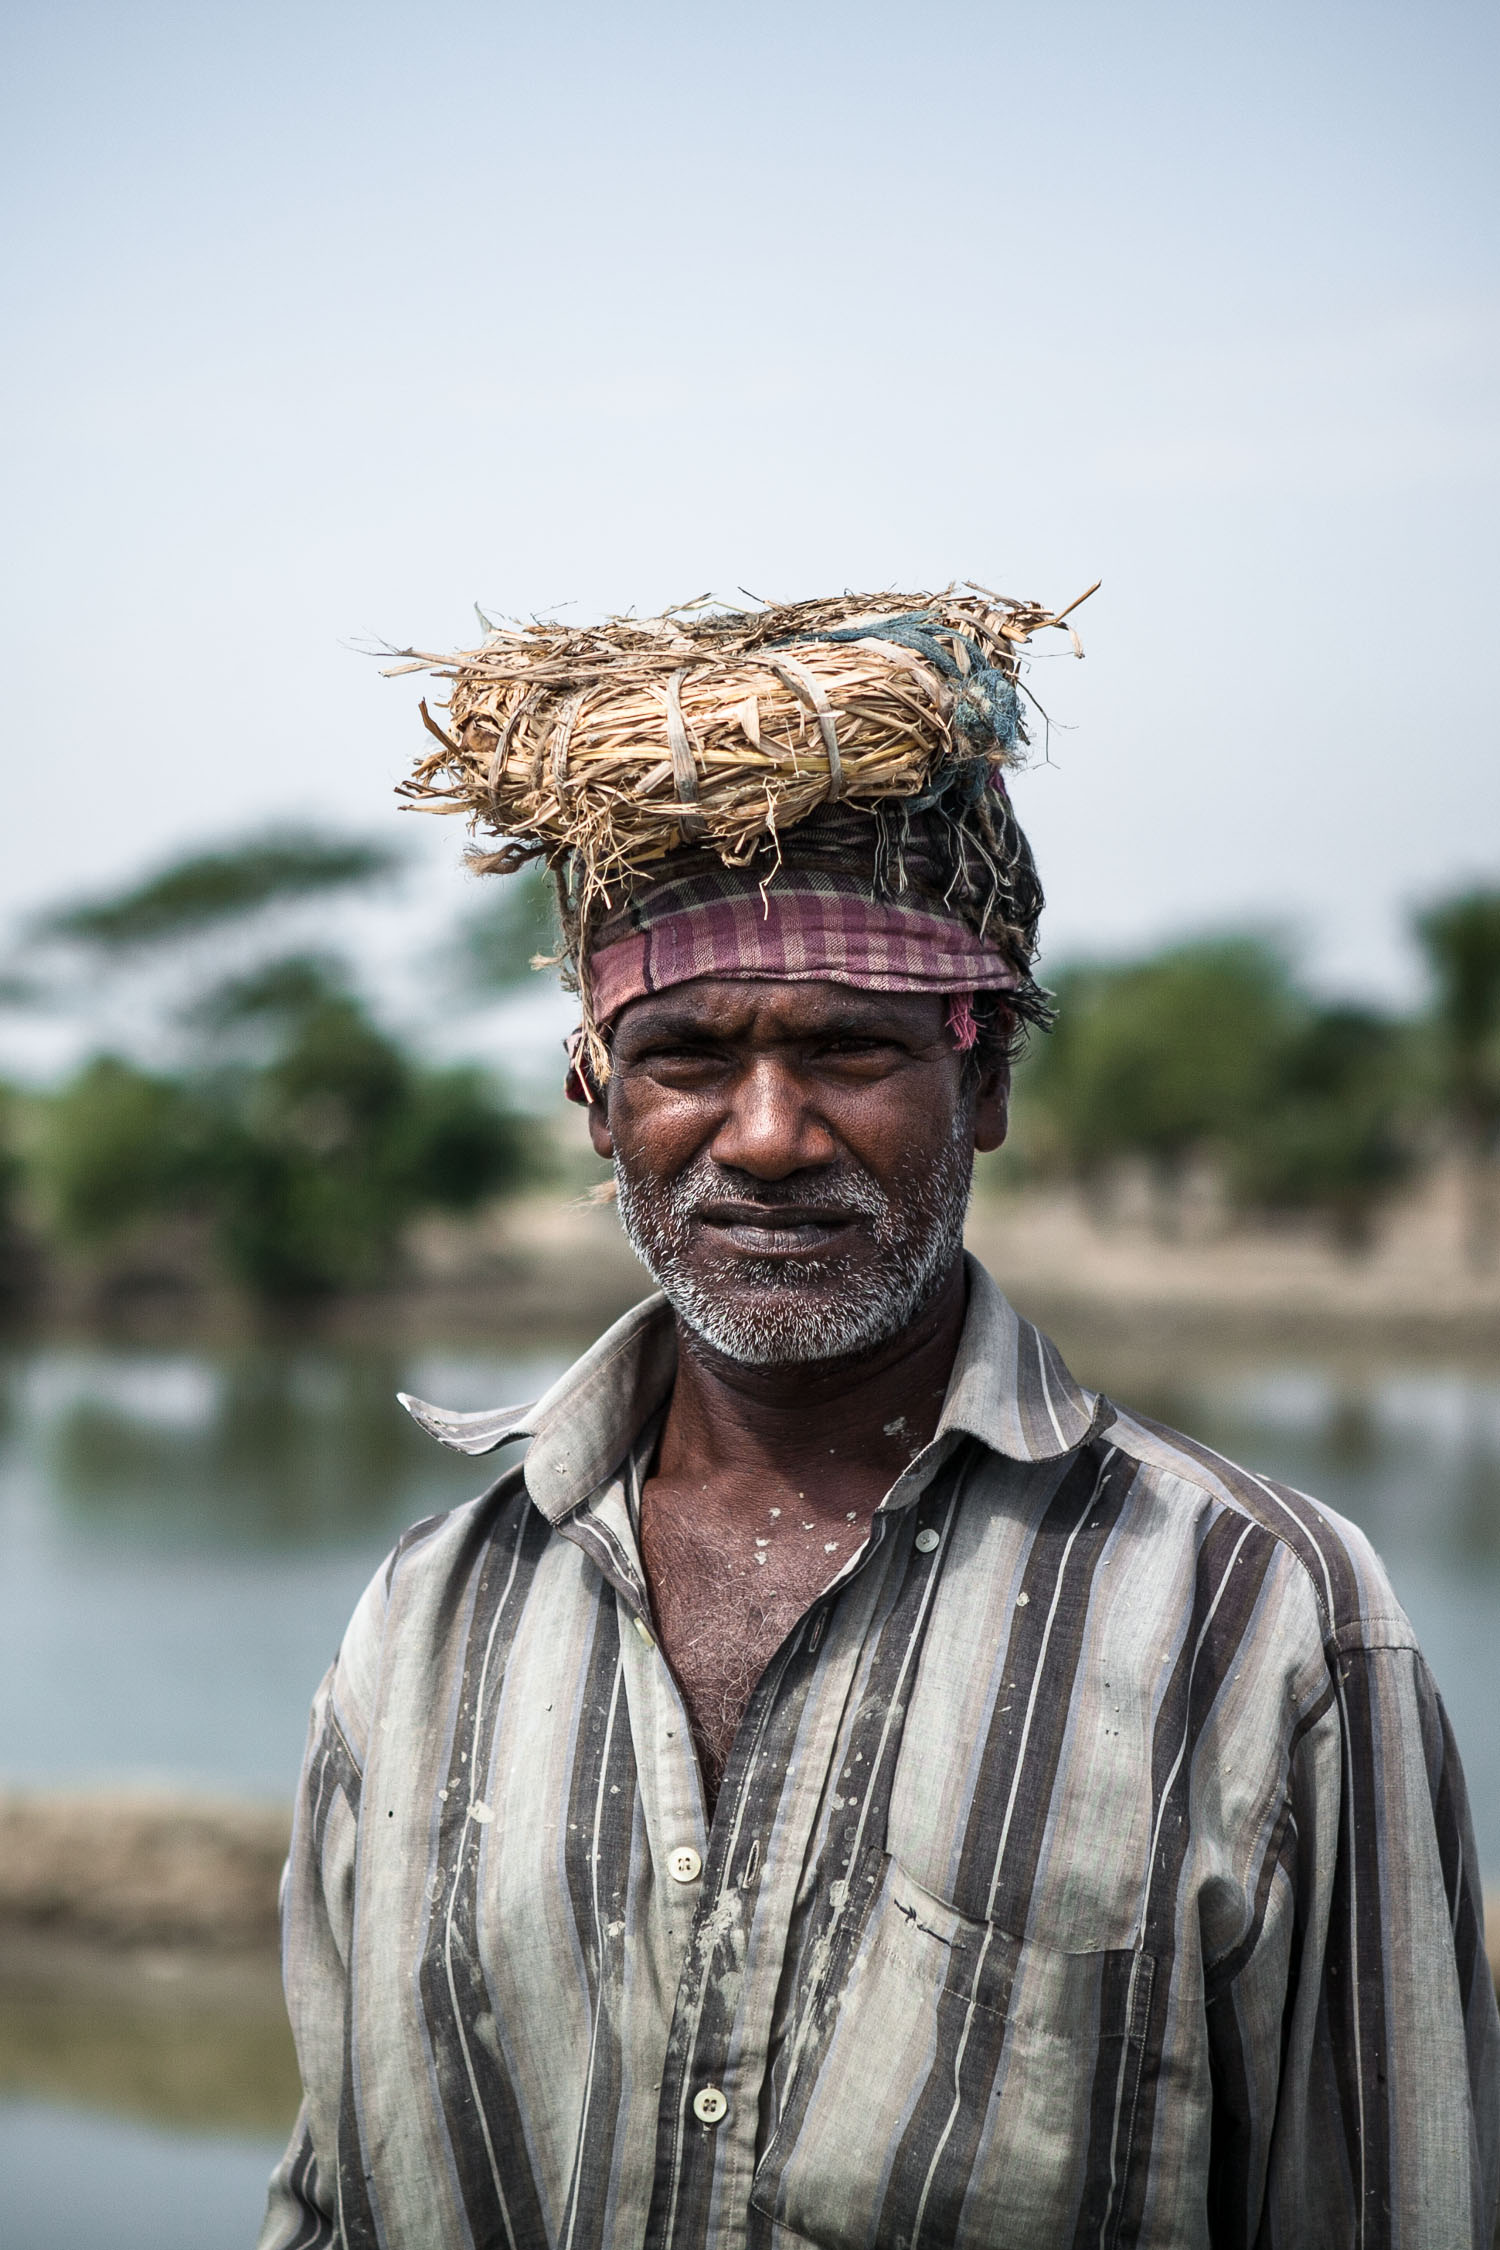 climate-migrants-bangladesh-maria-litwa-3531.jpg